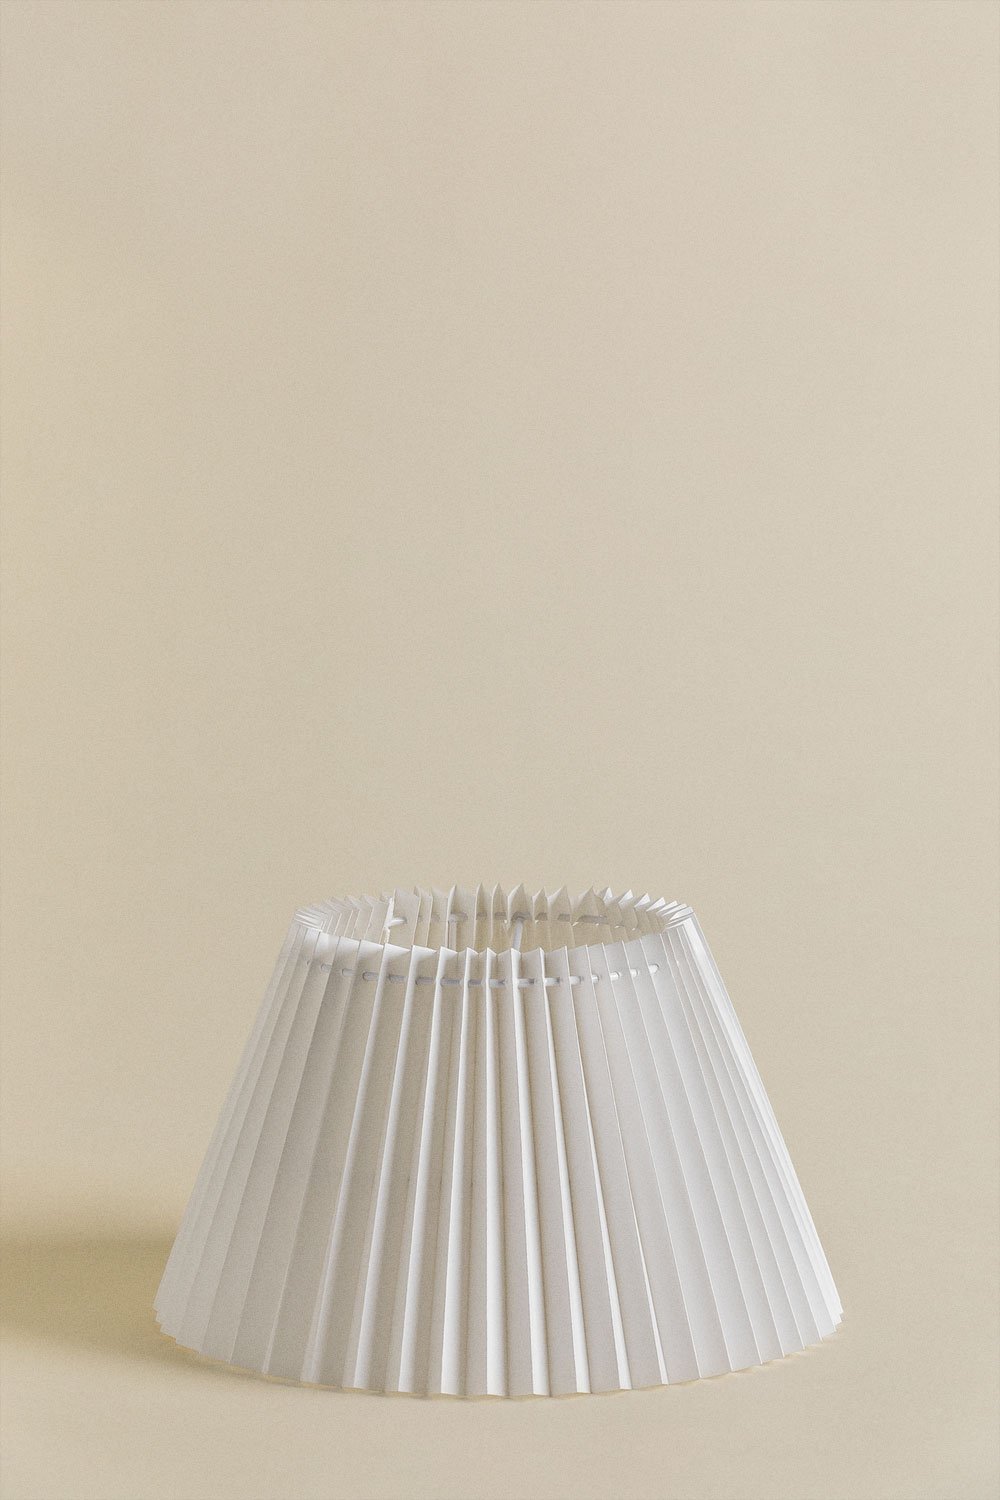 Oguran Rice Paper Lamp Shade , gallery image 1